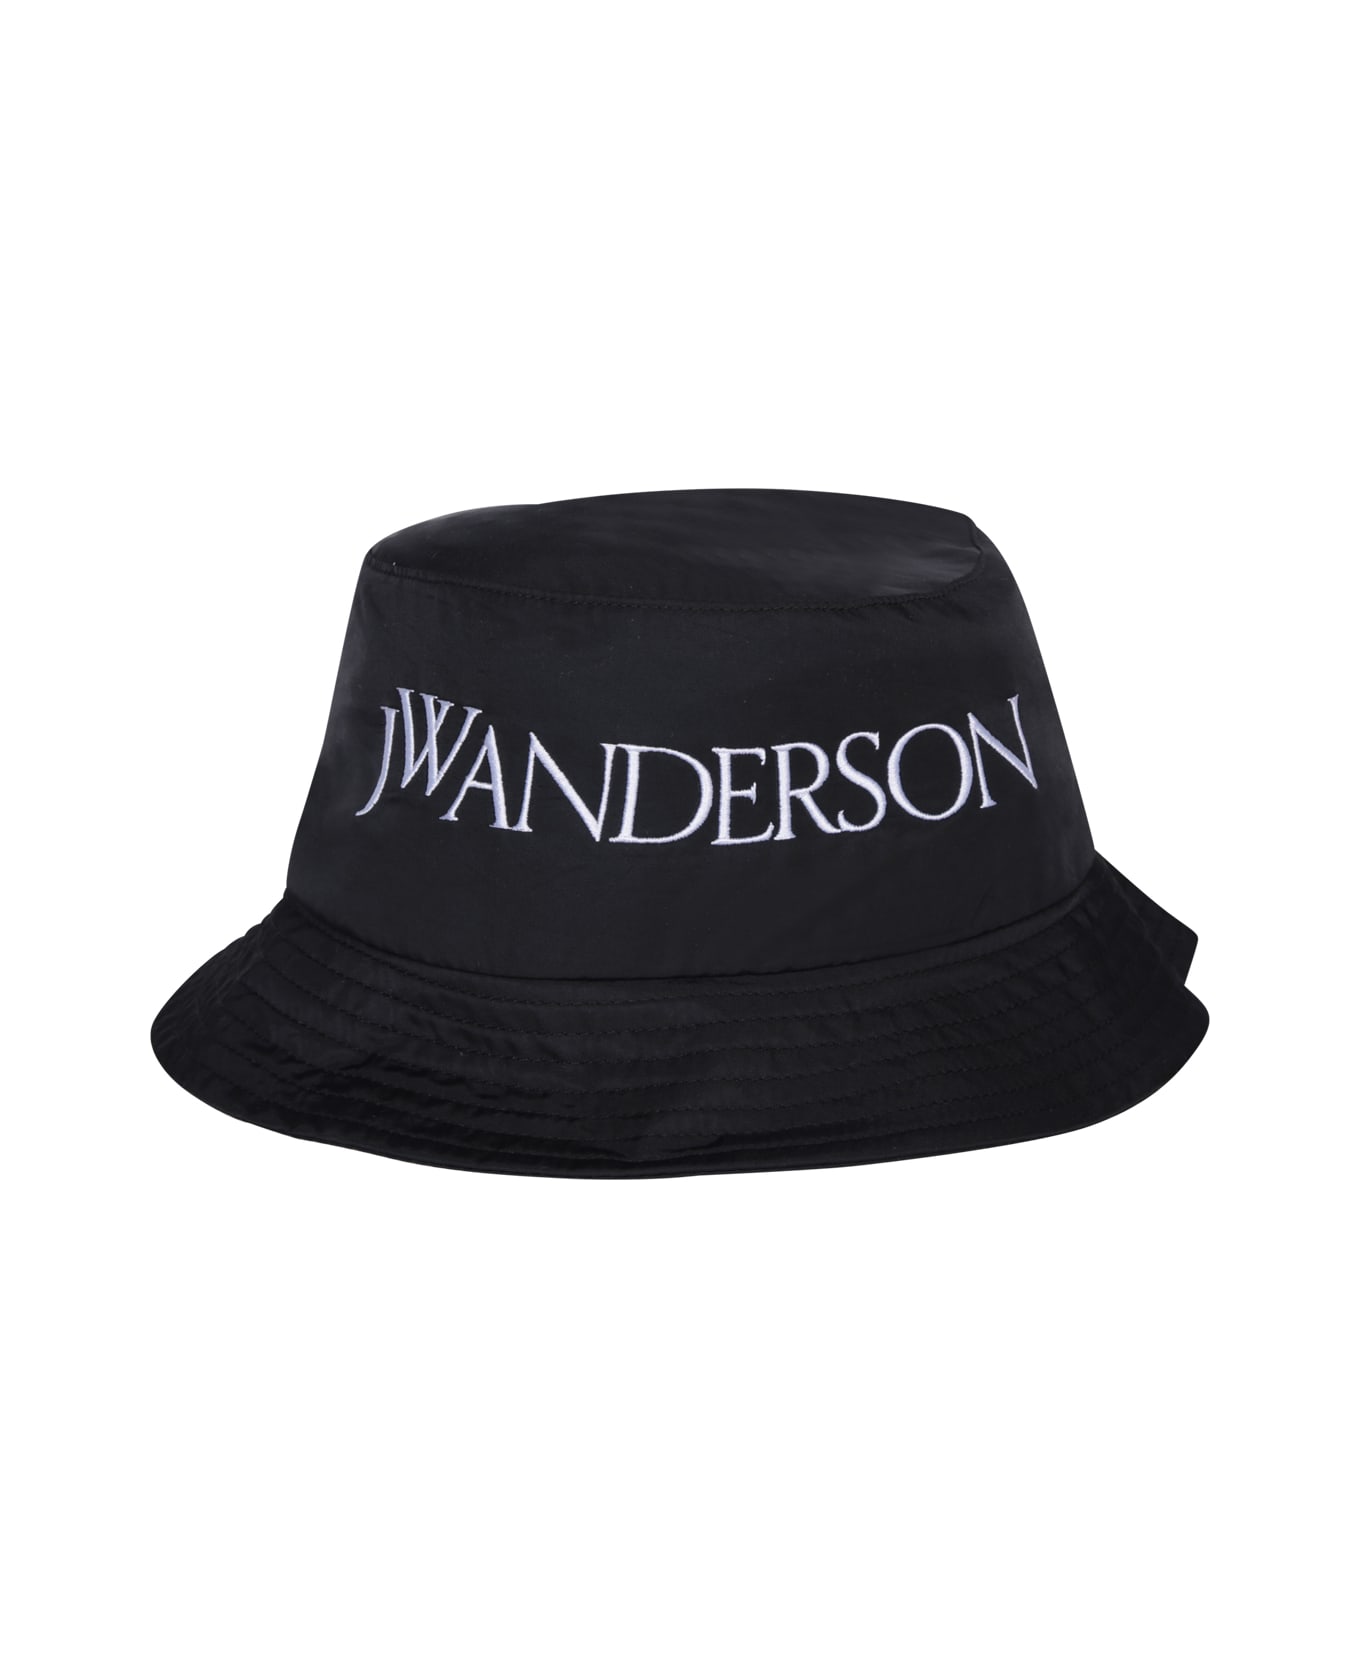 J.W. Anderson Black Bucket Hat - Black